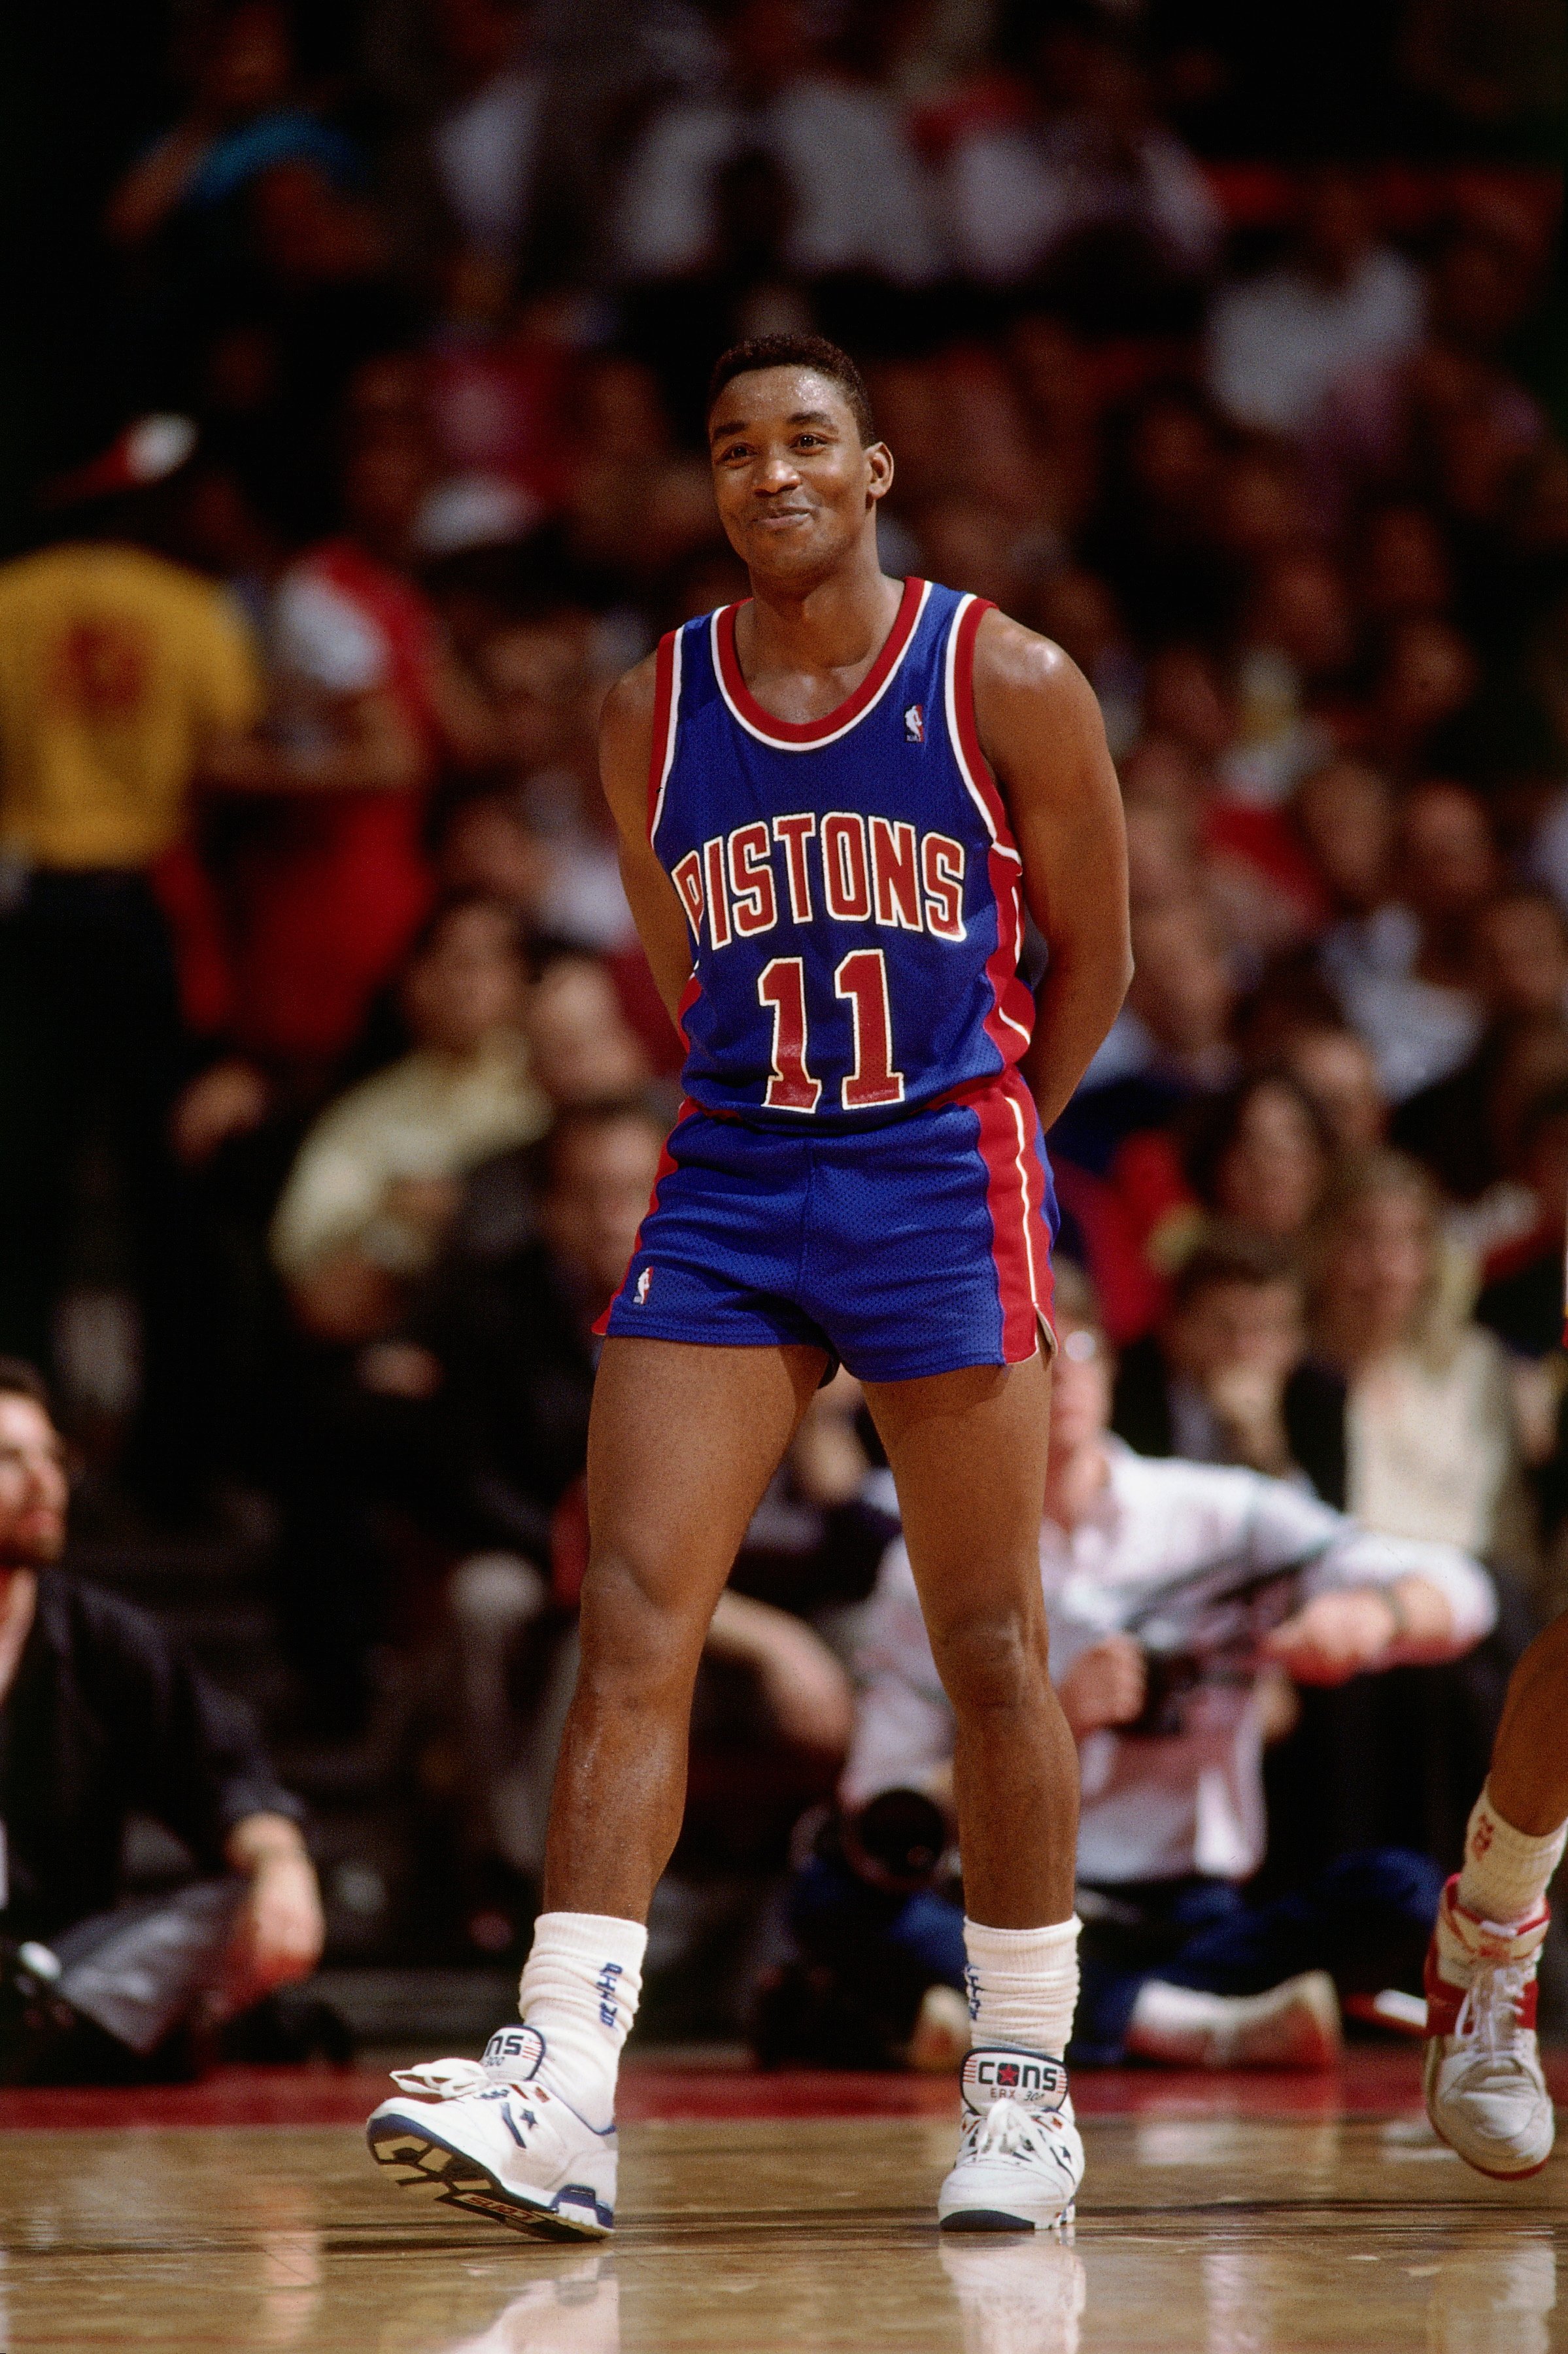 Detroit Pistons star player Isiah Thomas during a 1989 NBA game against Atlanta Hawks in Atlanta. | Photo: Getty Images